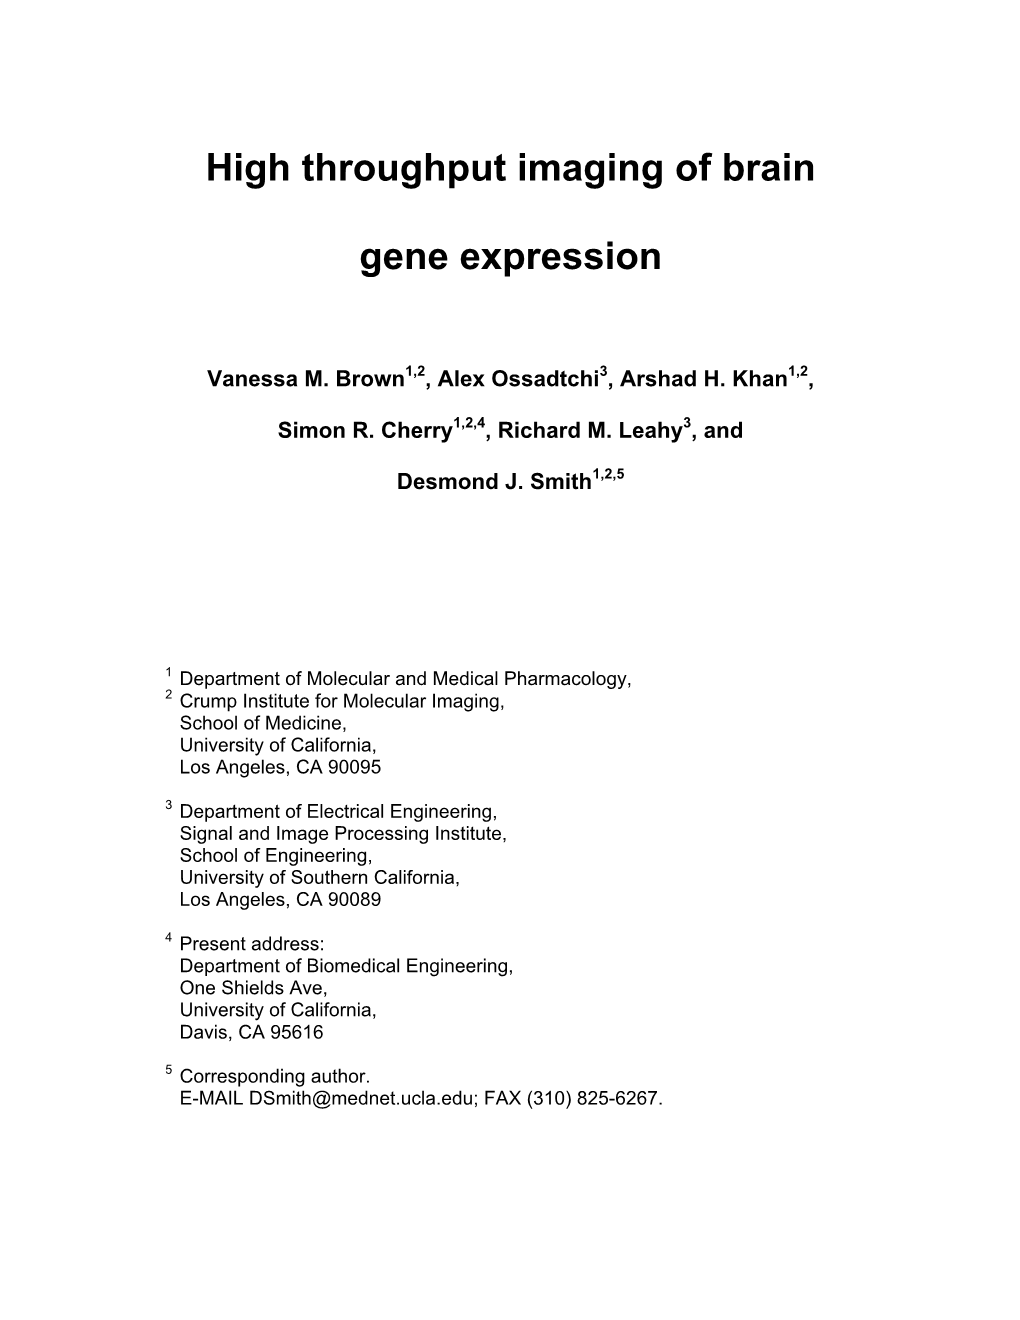 High Throughput Imaging of Brain Gene Expression